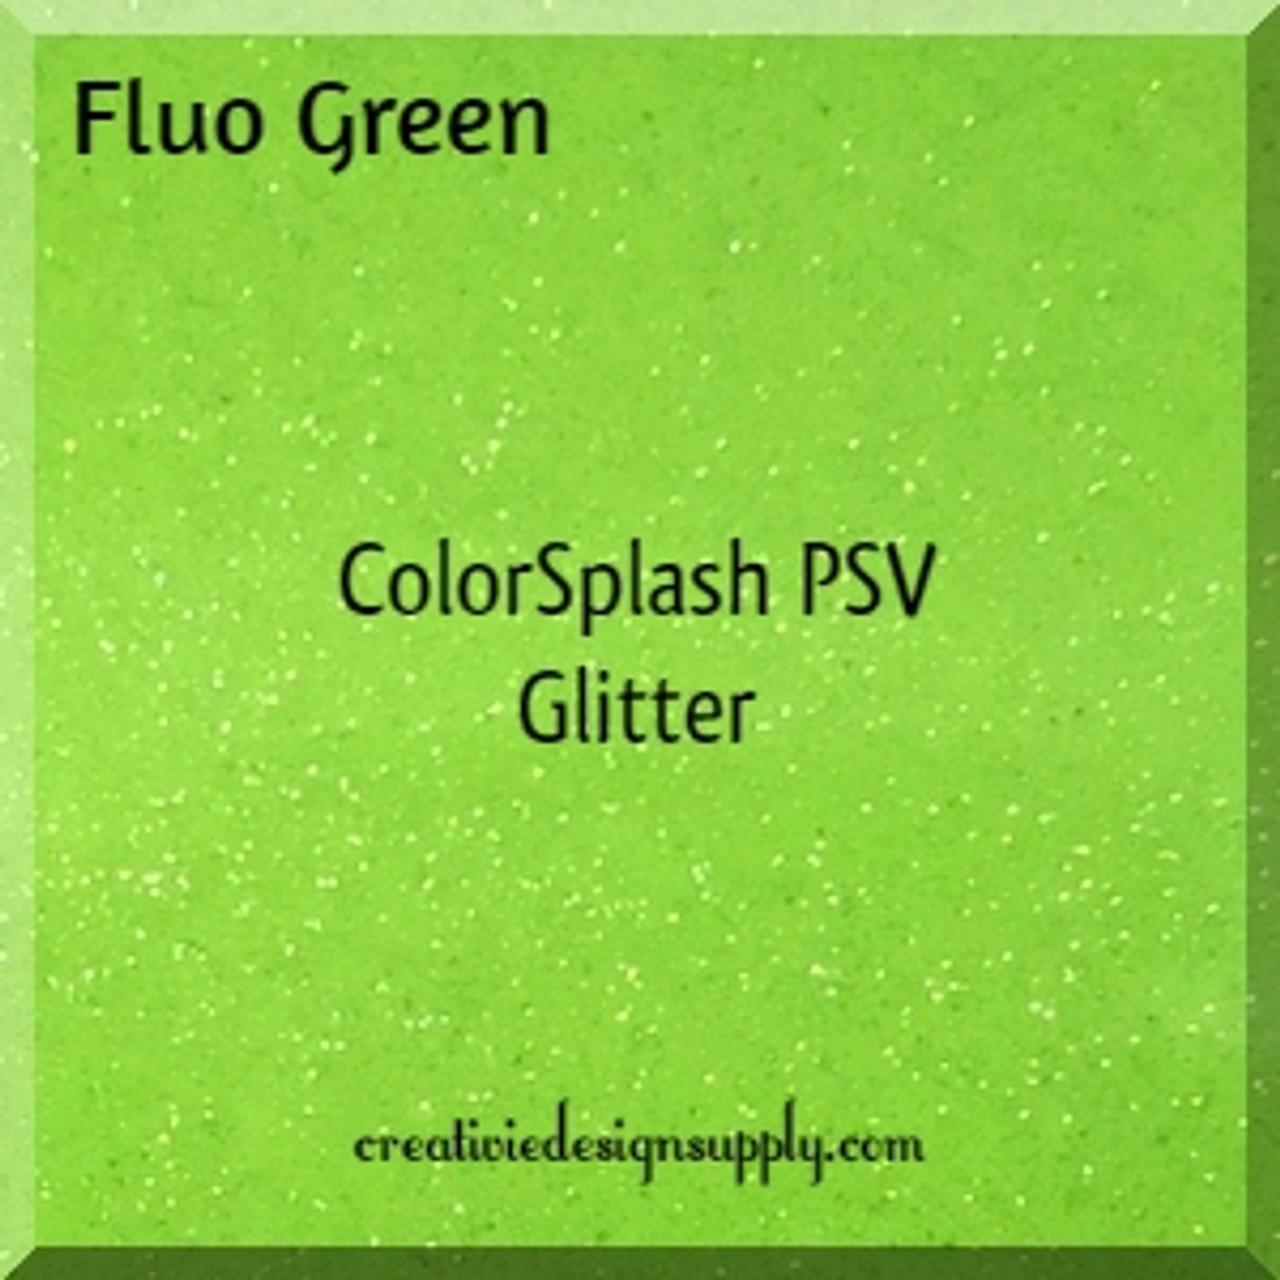 ColorSplash PSV Glitter | Fluo Green